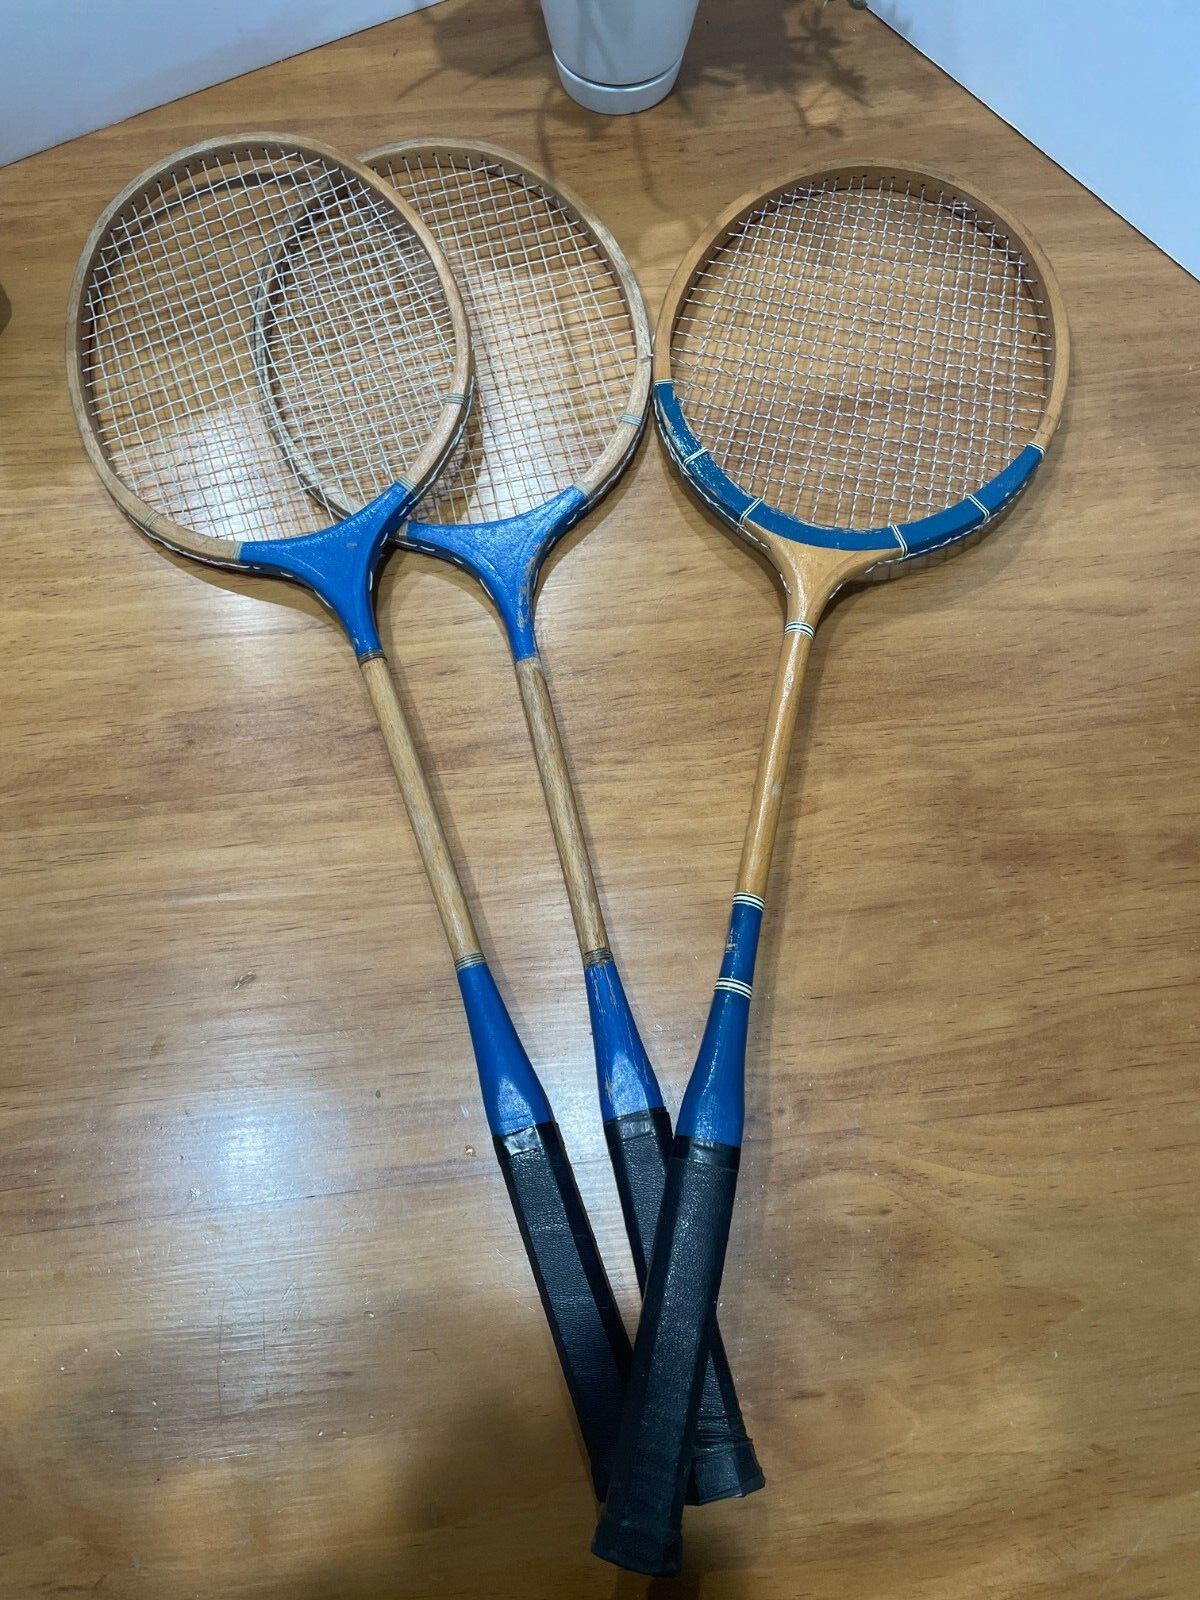 Lot of 3 Vintage Wood Badminton Rackets Retro Victoria & Stardom